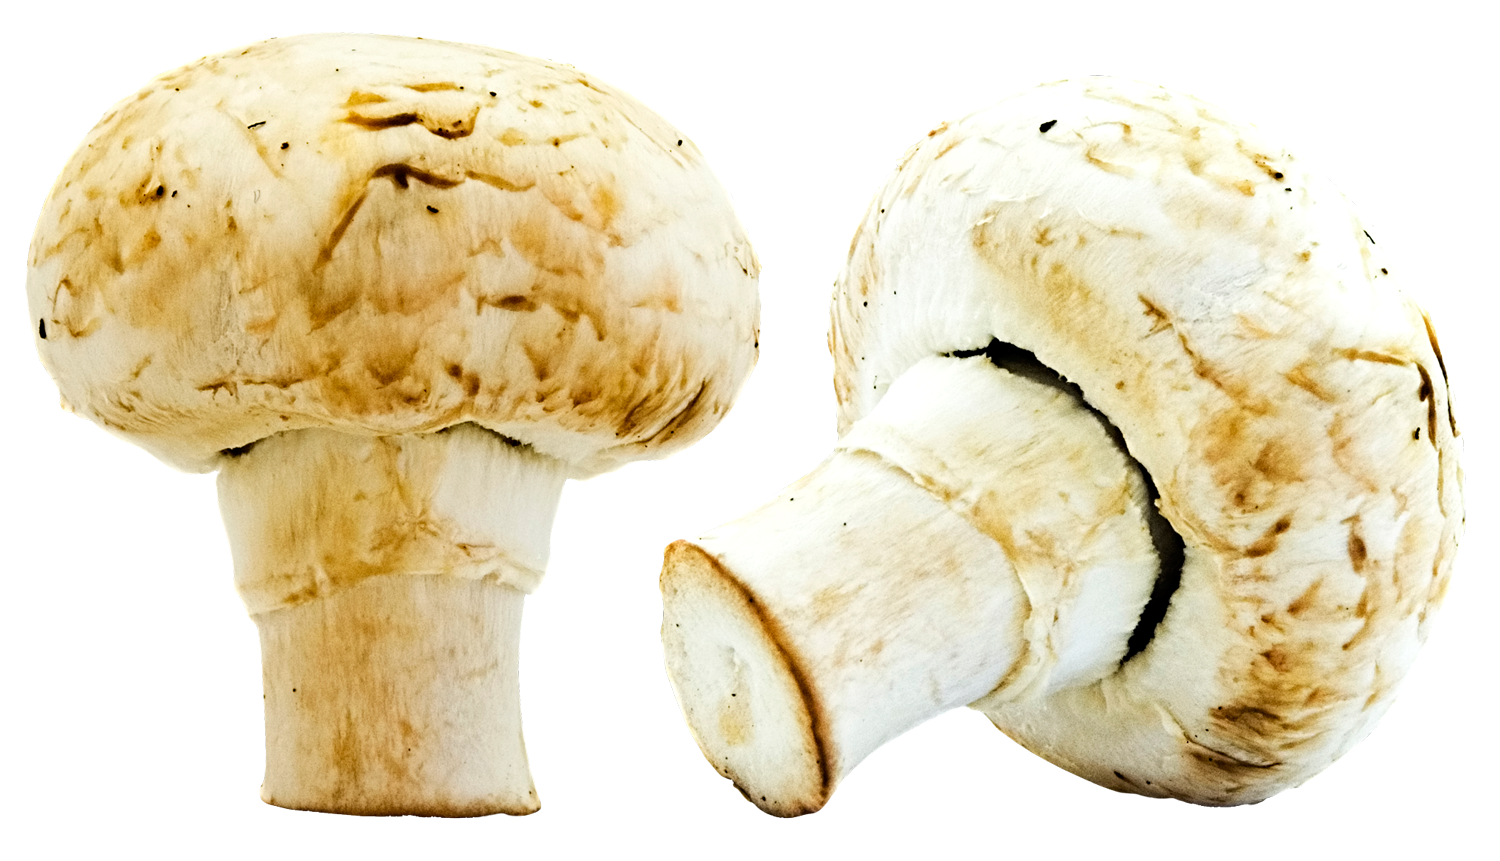 Mushroom PNG Image with Transparent Background